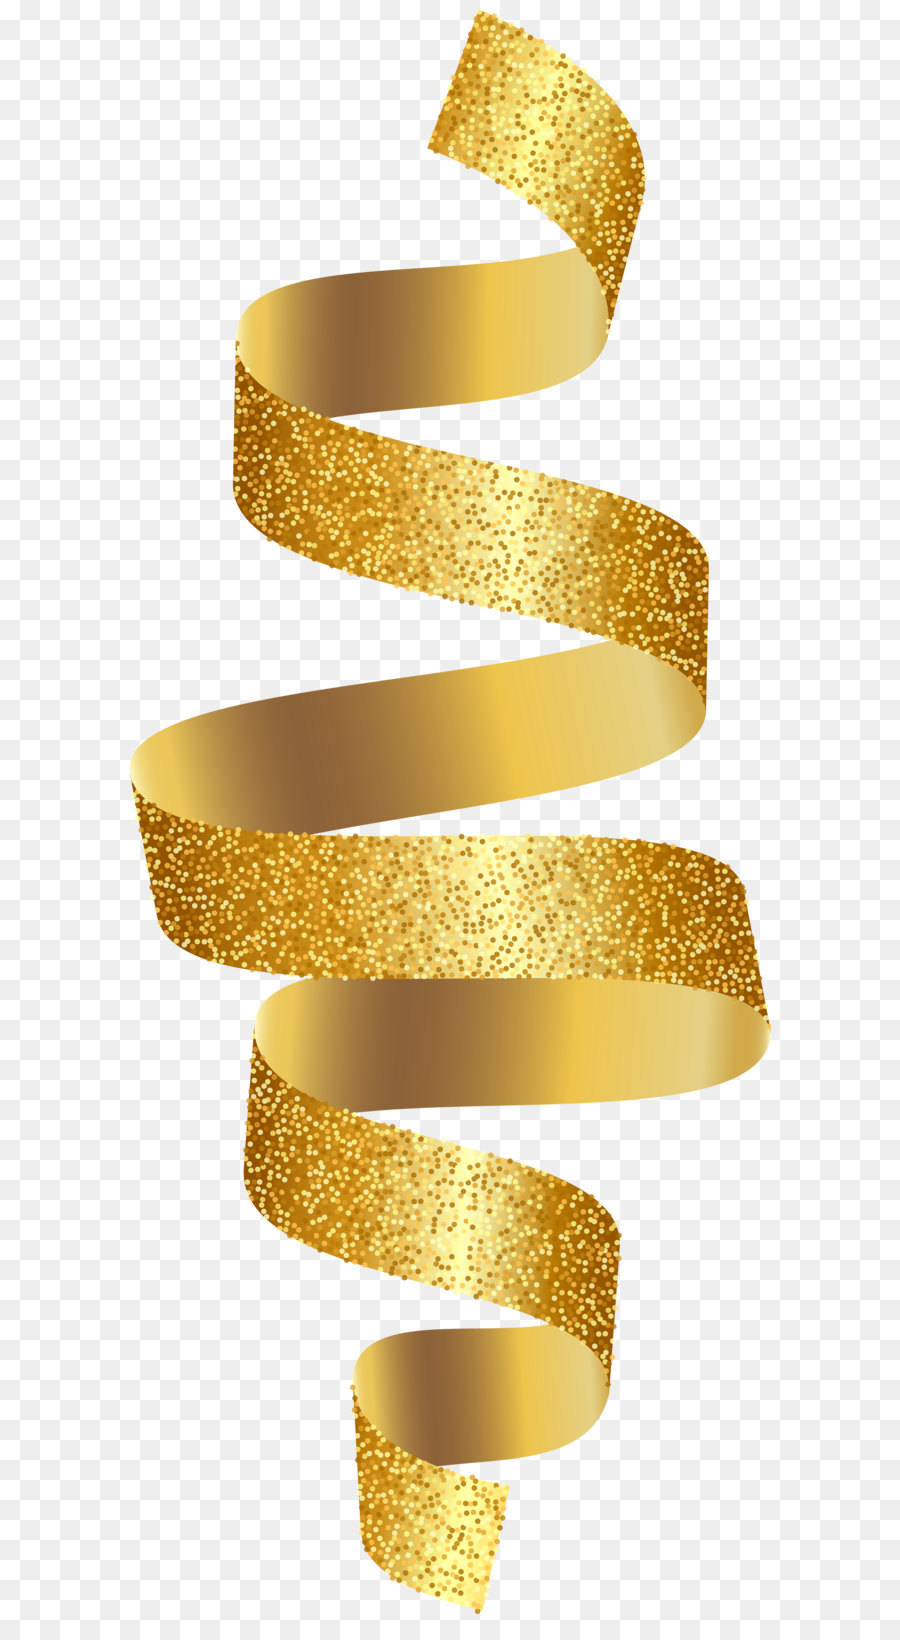 Gold Ribbon Clip art - Gold Ribbon PNG Transparent Clip Art Image png download - 3204*8000 - Free Transparent Gold png Download.